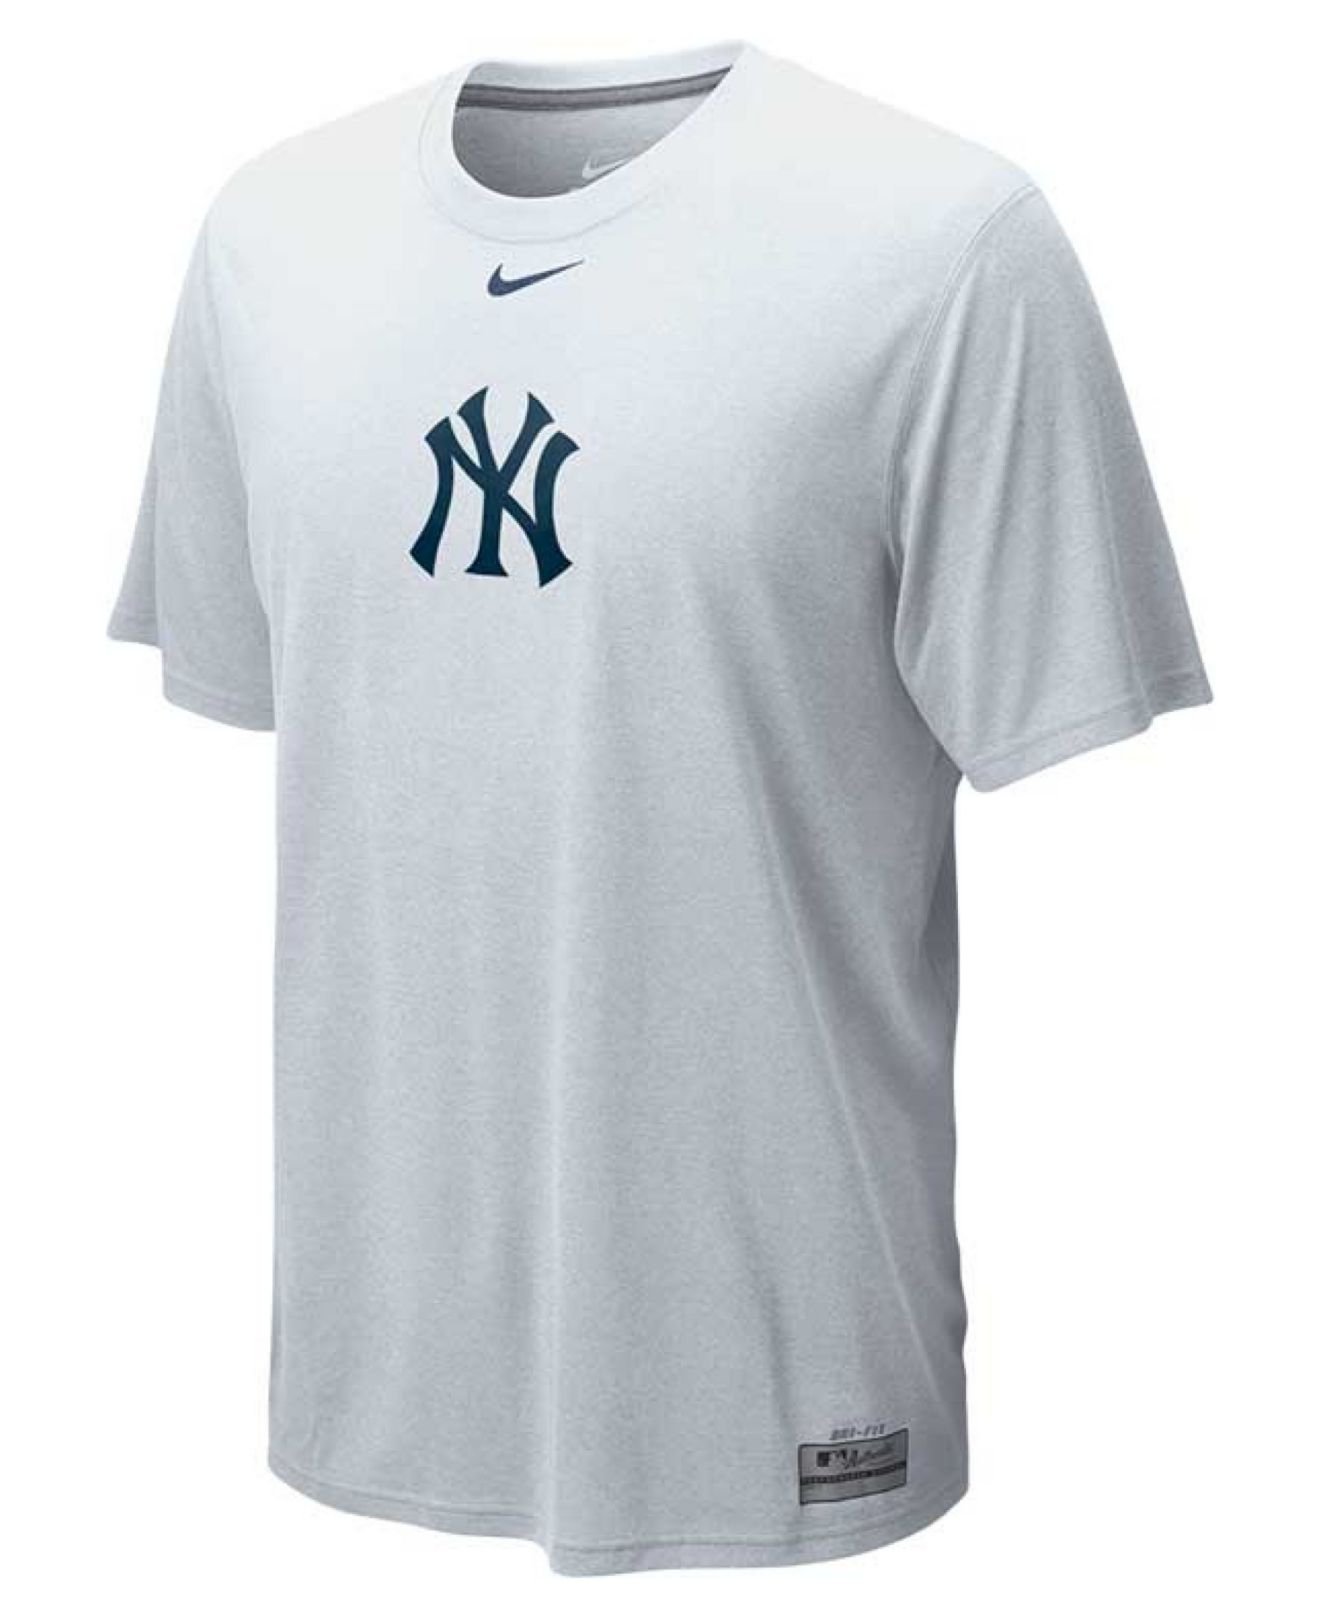 Lyst - Nike Men's New York Yankees Dri-fit Logo Legend T-shirt in White ...